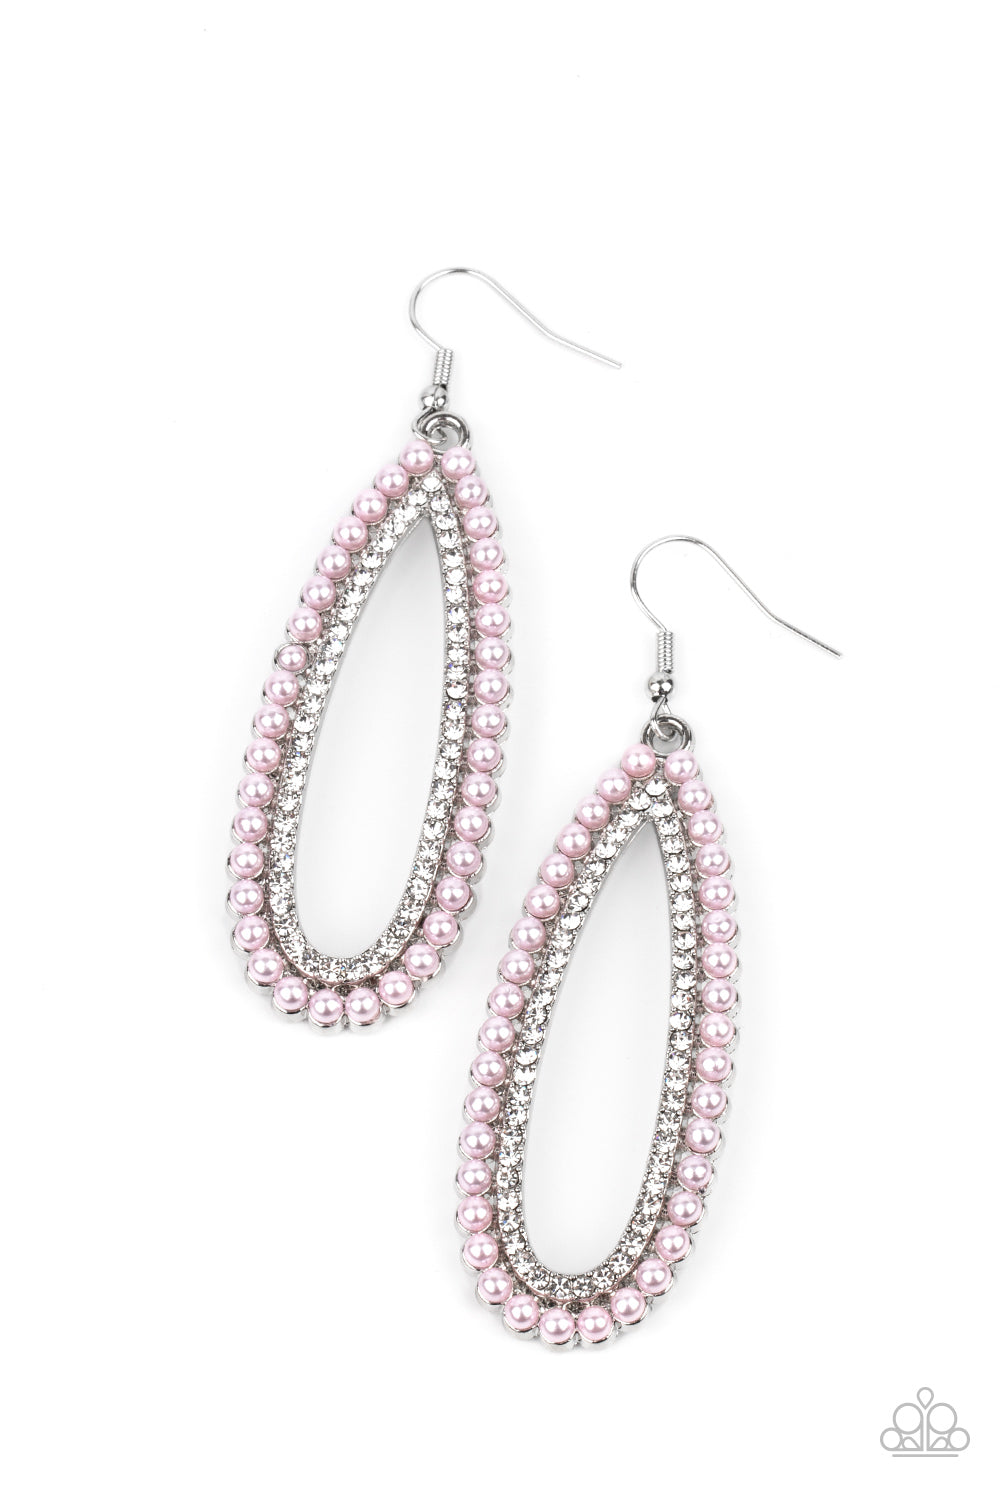 Glamorously Glowing Earrings - Pink